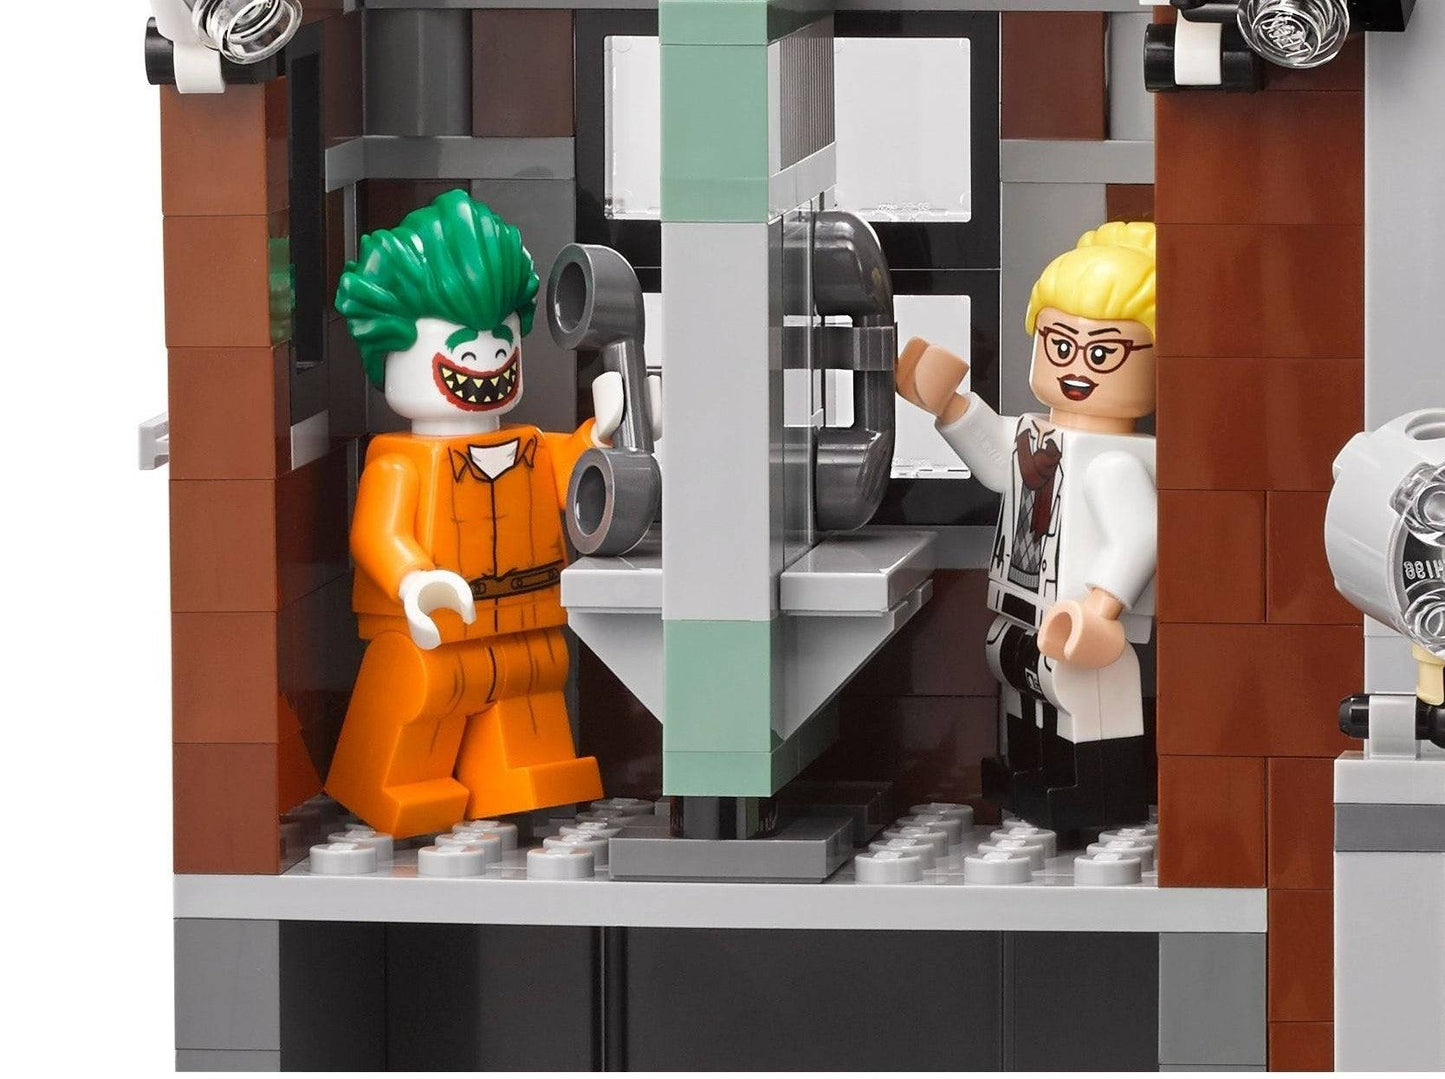 70912 : Arkham Asylum (Batman) - Brickset for You Huur Lego Kortirjk (West-Vlaanderen)